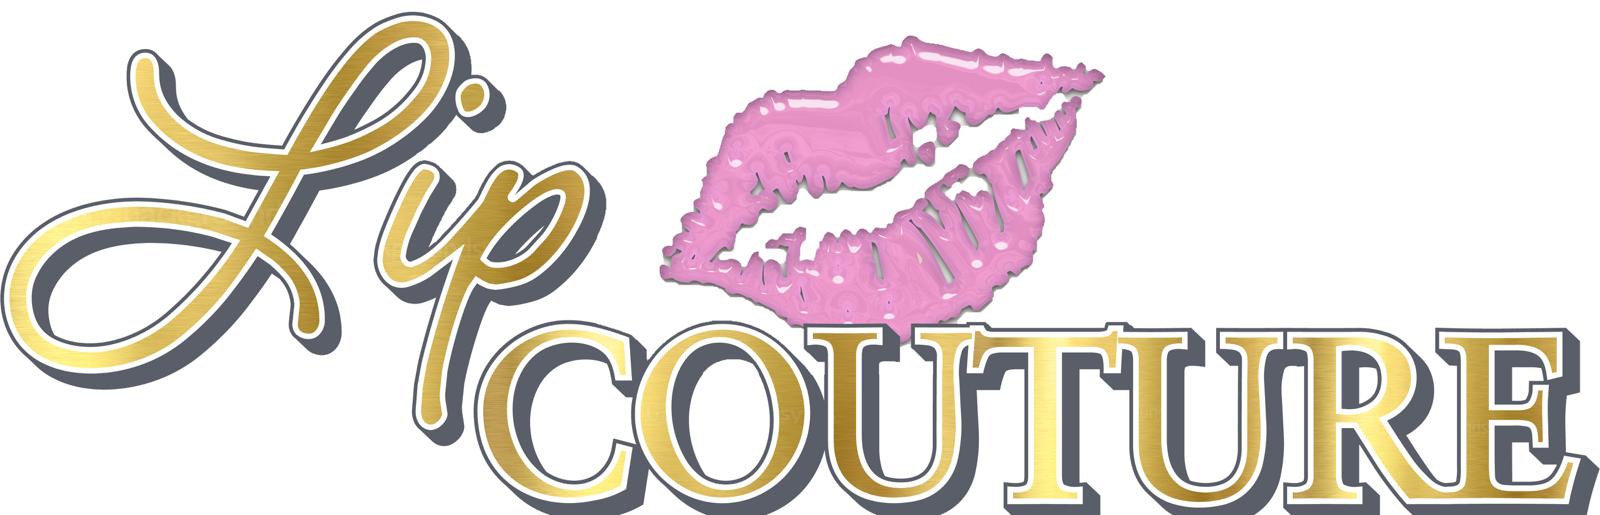 Lip Couture Logo